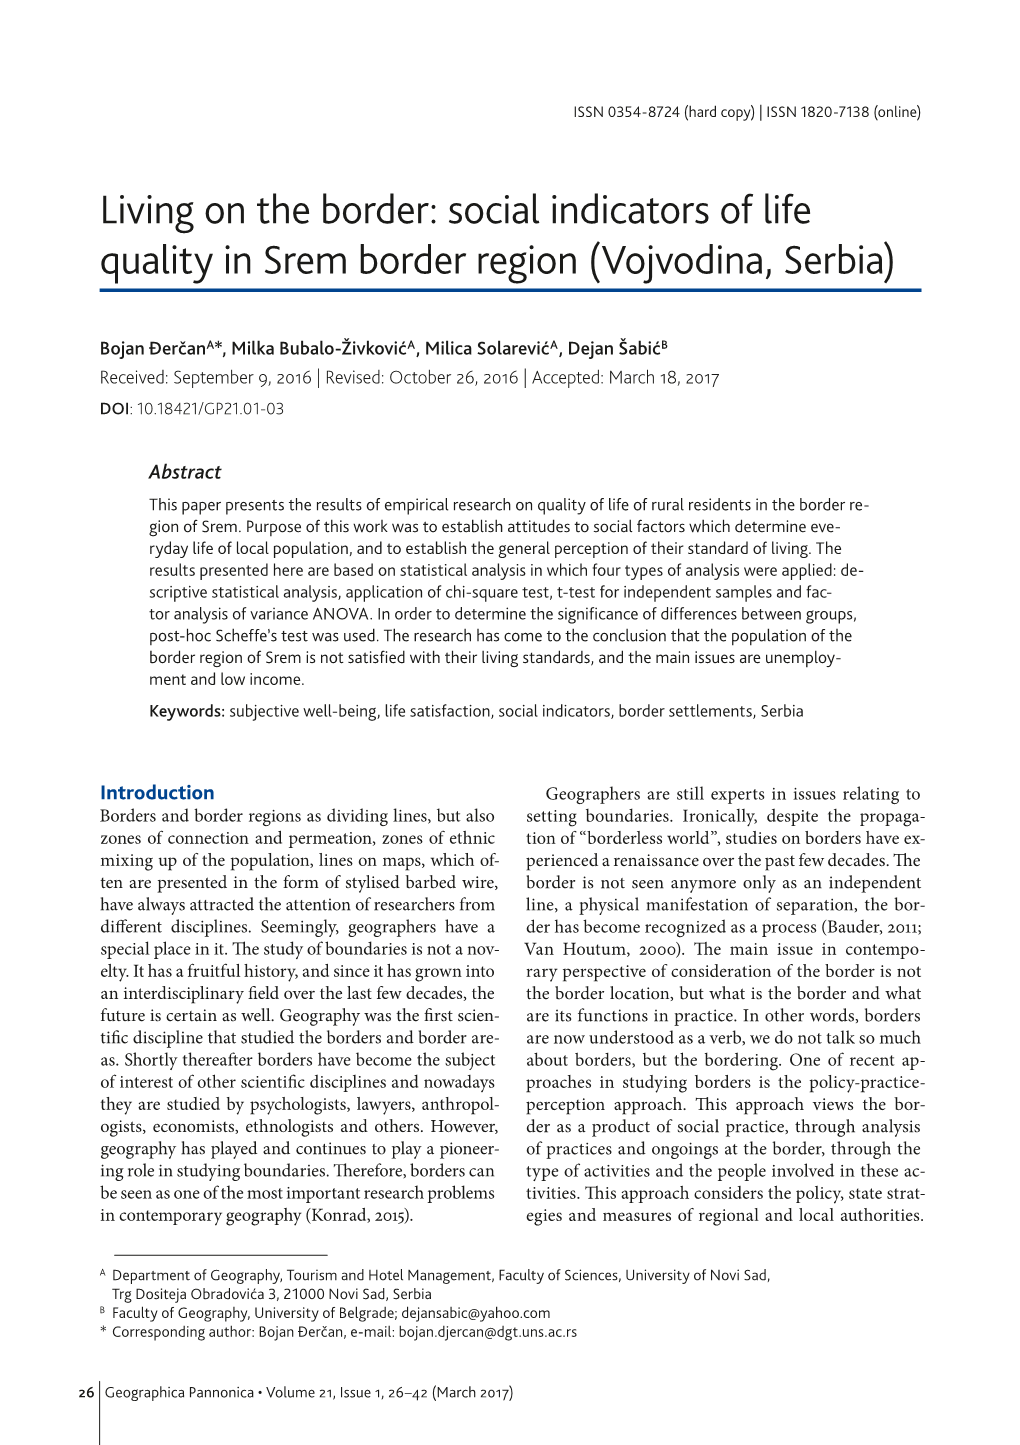 Living on the Border: Social Indicators of Life Quality in Srem Border Region (Vojvodina, Serbia)